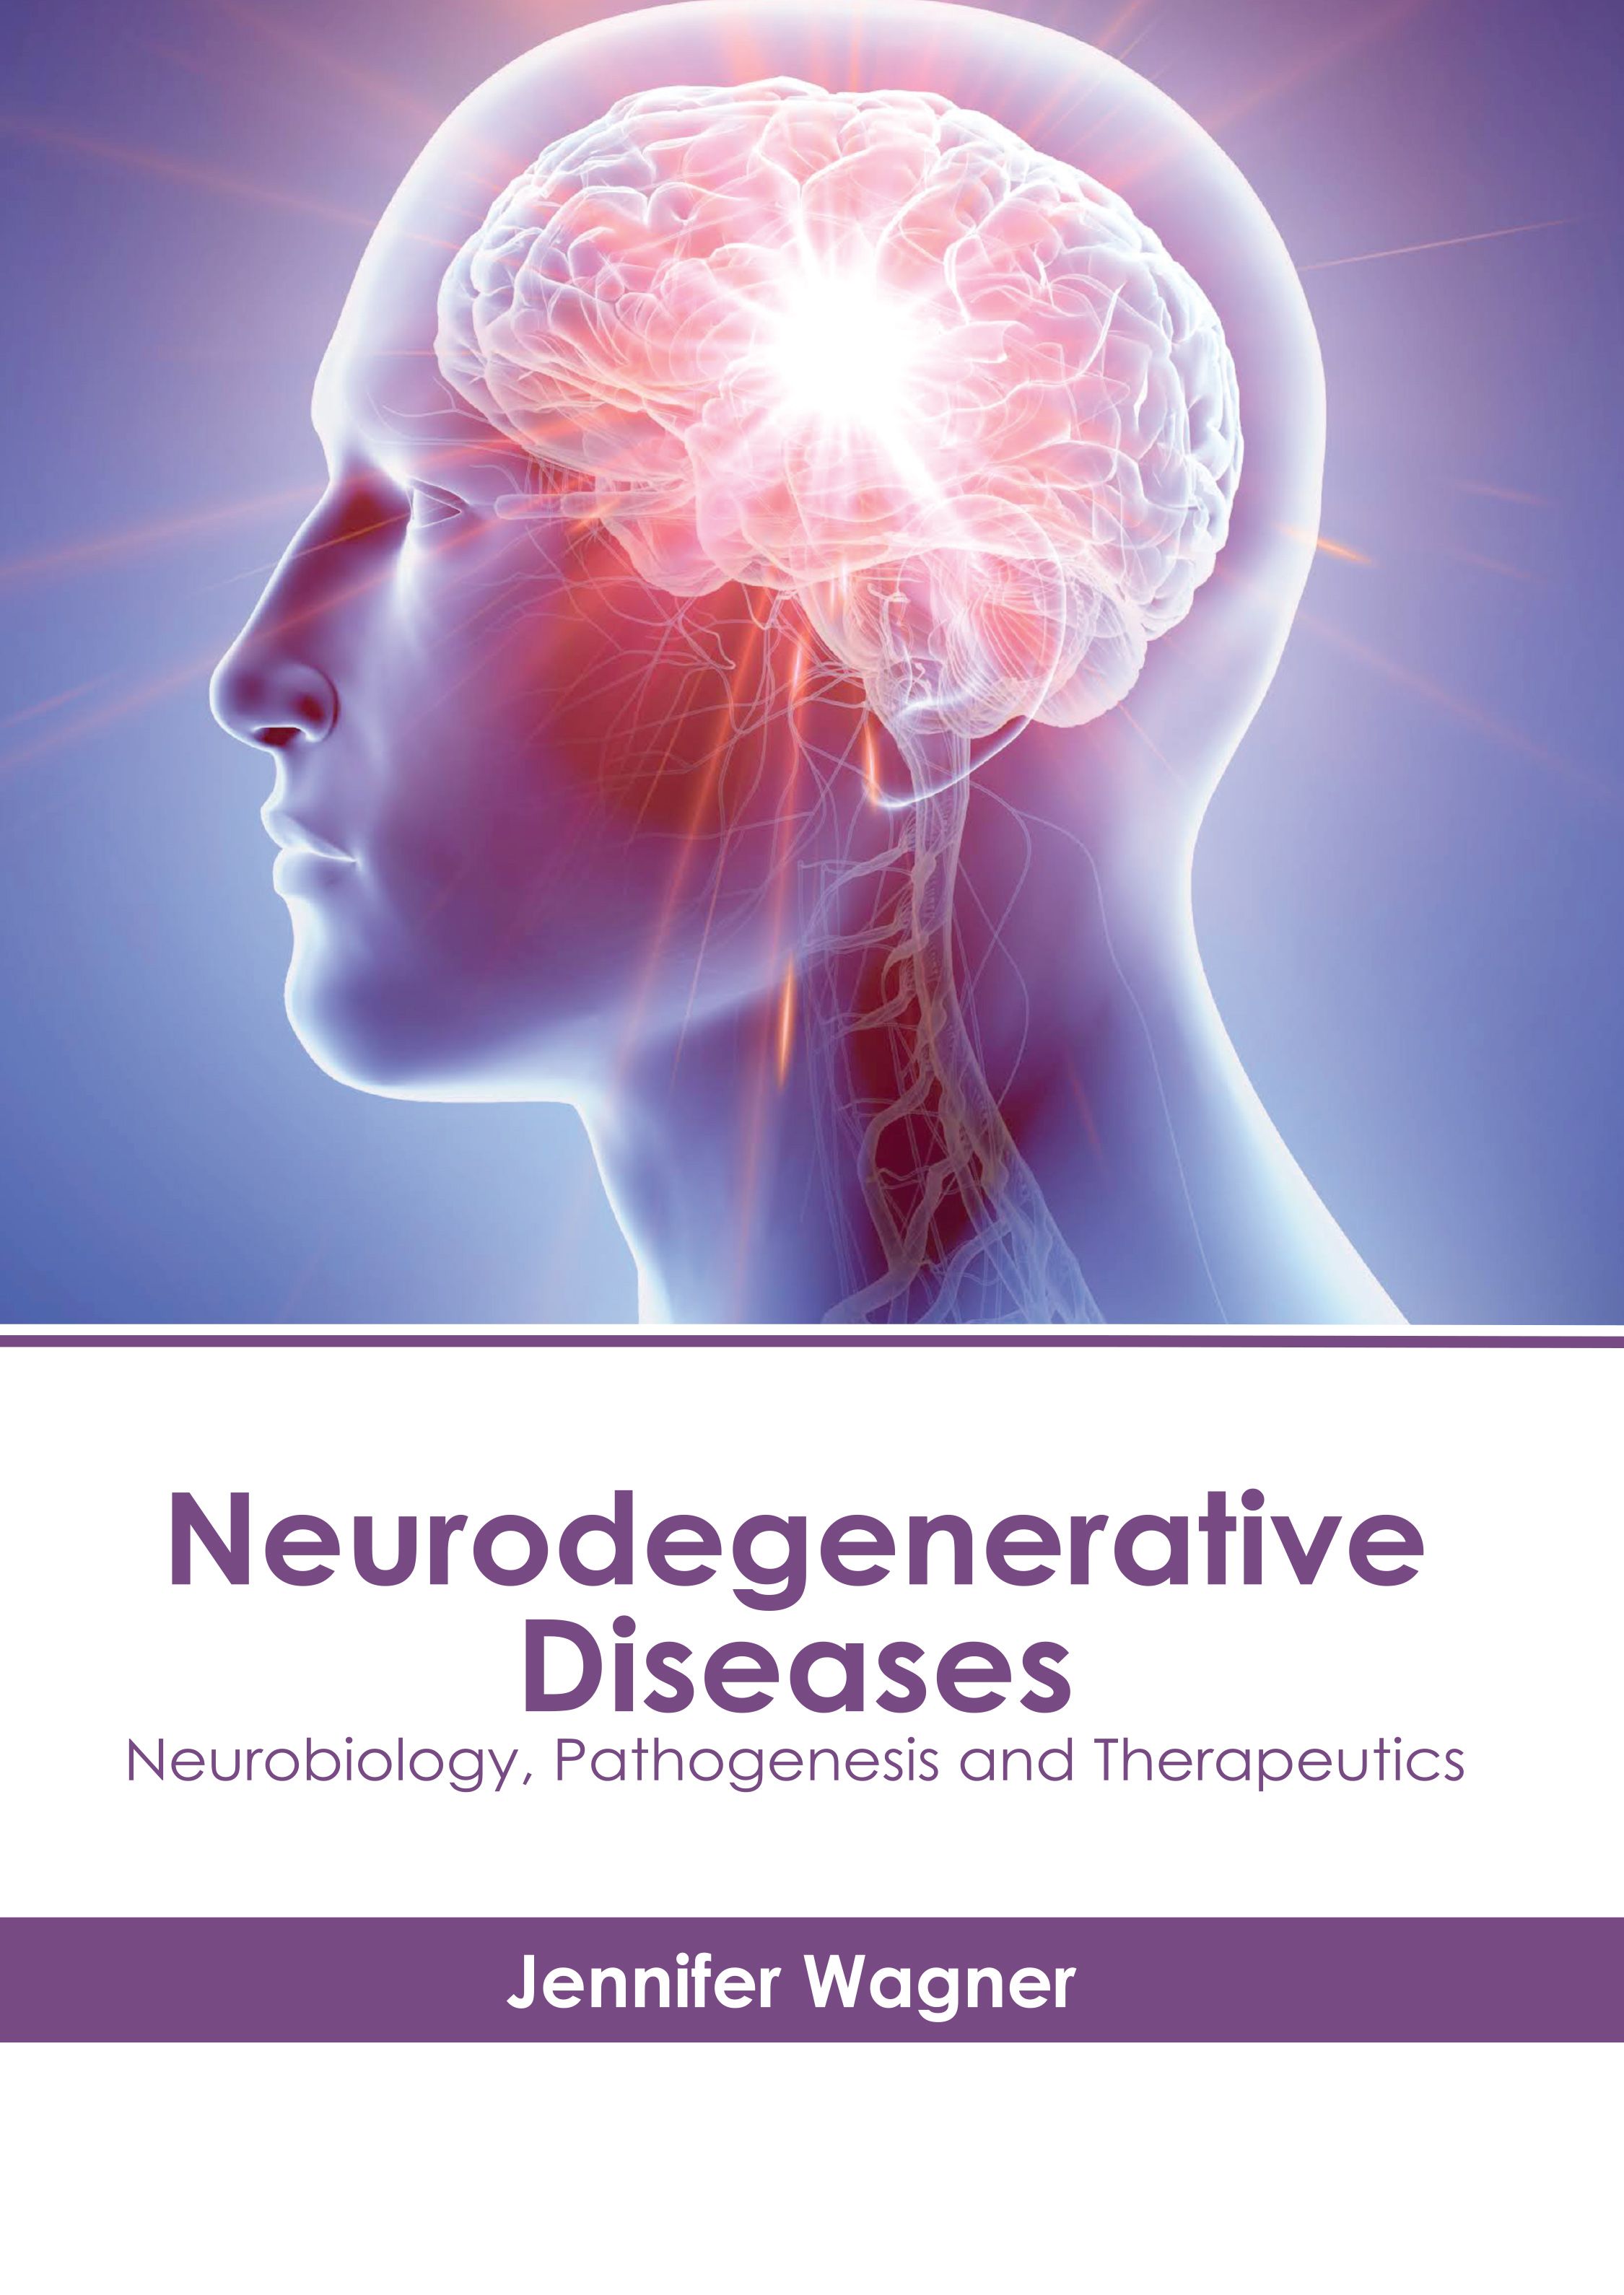 NEURODEGENERATIVE DISEASES: NEUROBIOLOGY, PATHOGENESIS AND THERAPEUTICS